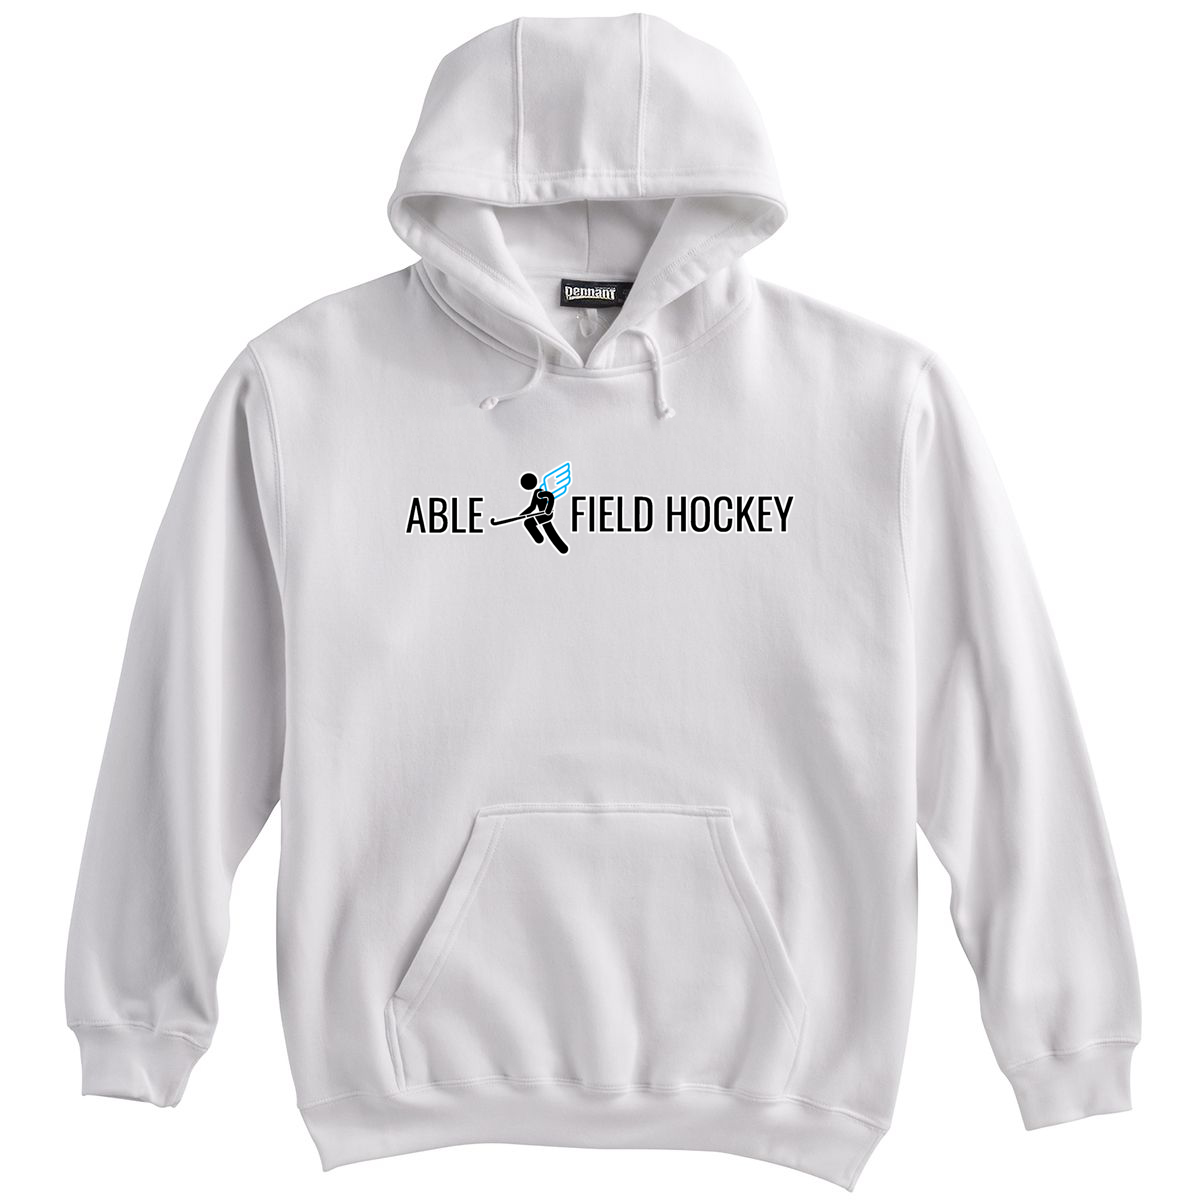 Able Field Hockey Sweatshirt